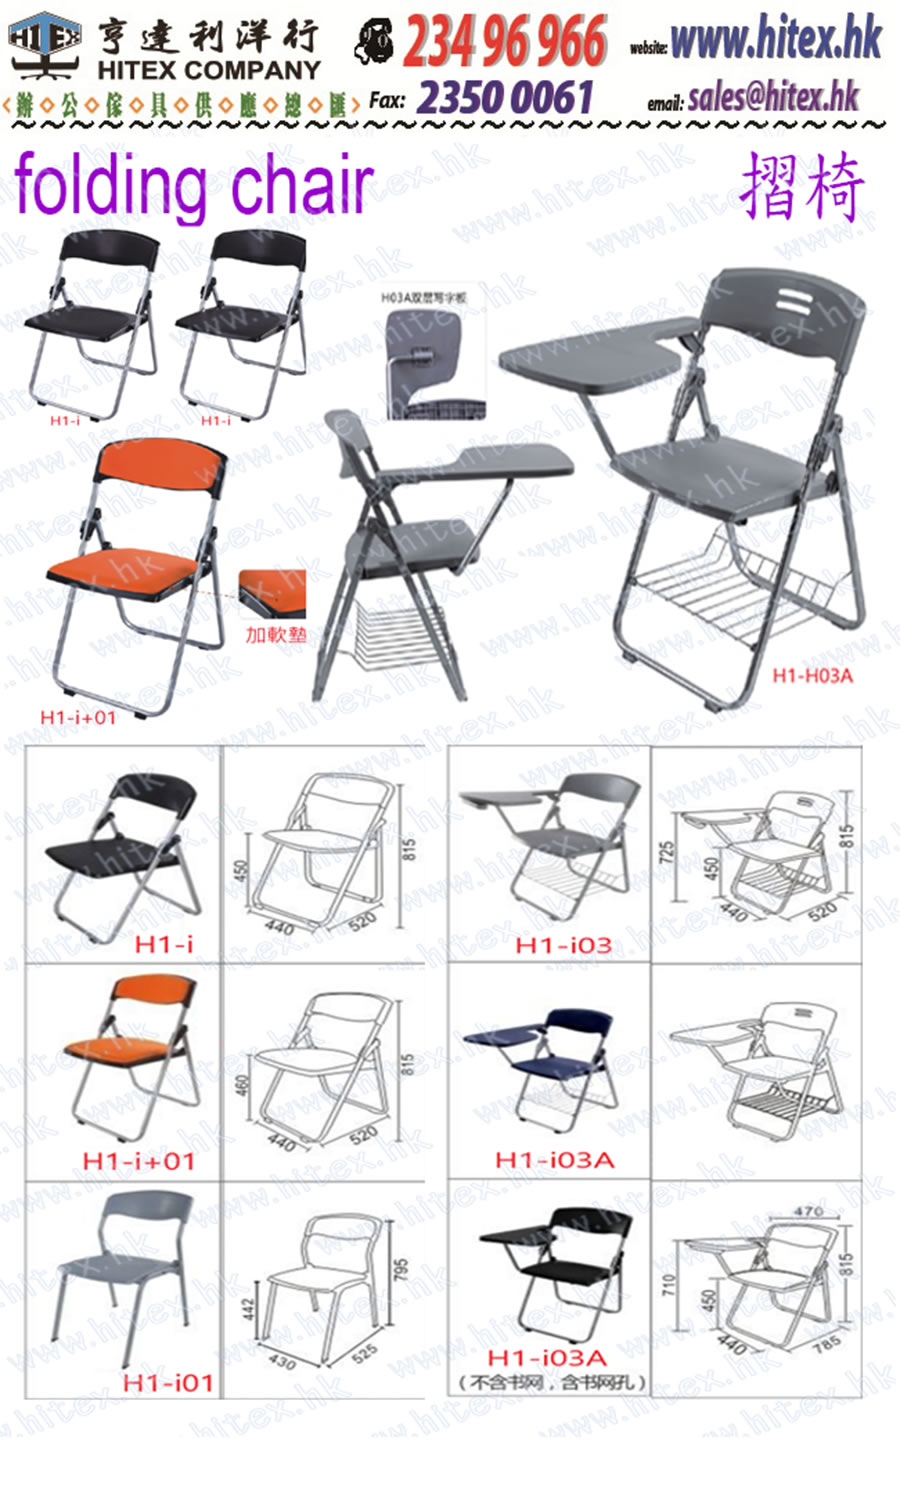 folding-chair-h1-i-blank.jpg